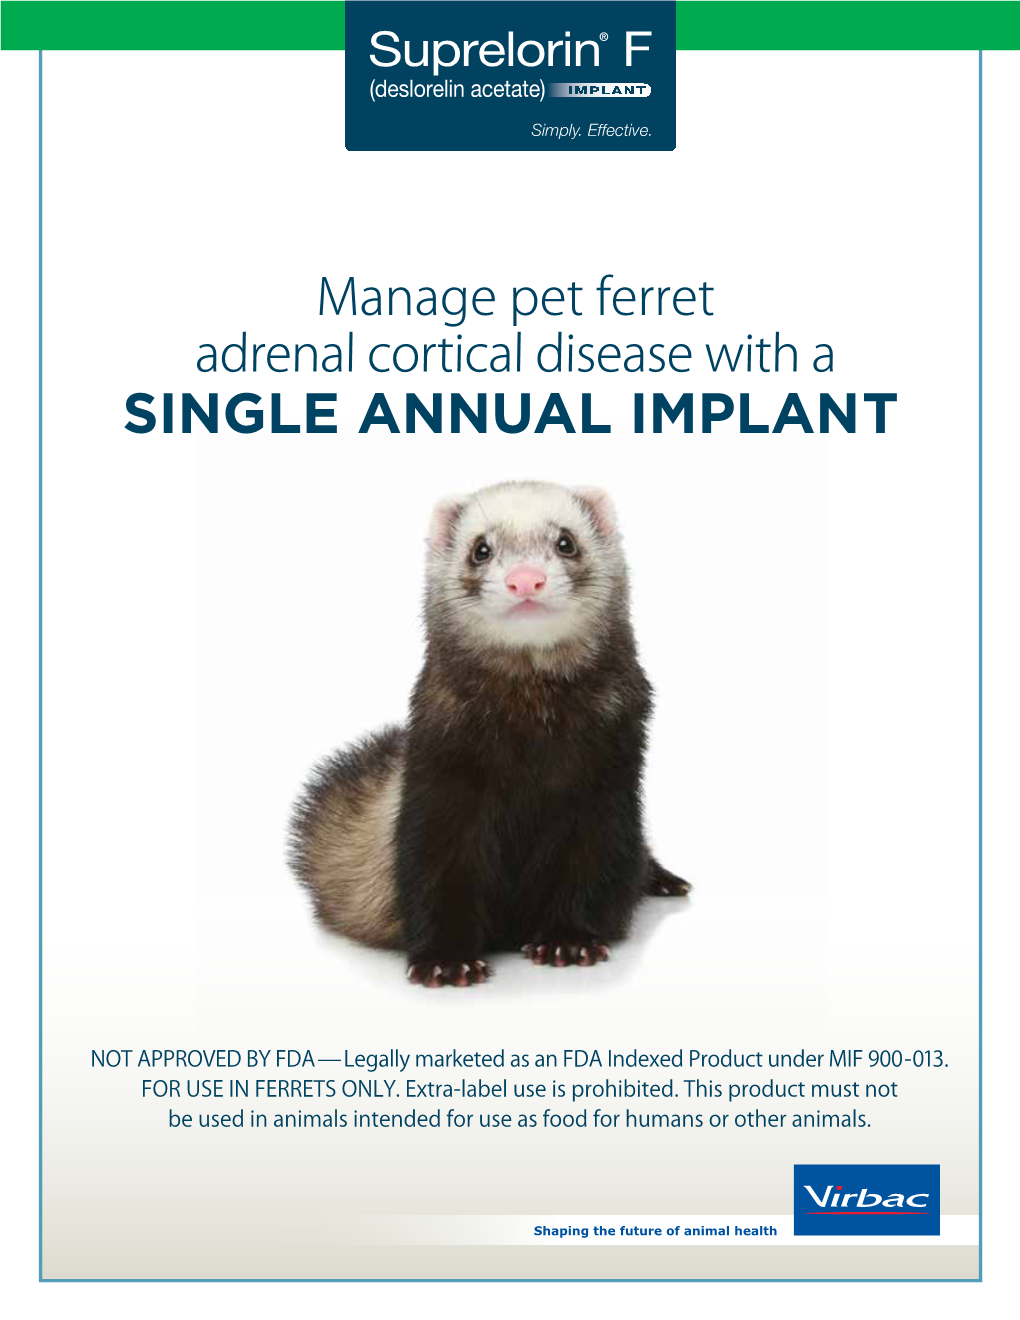 Single Annual Implant